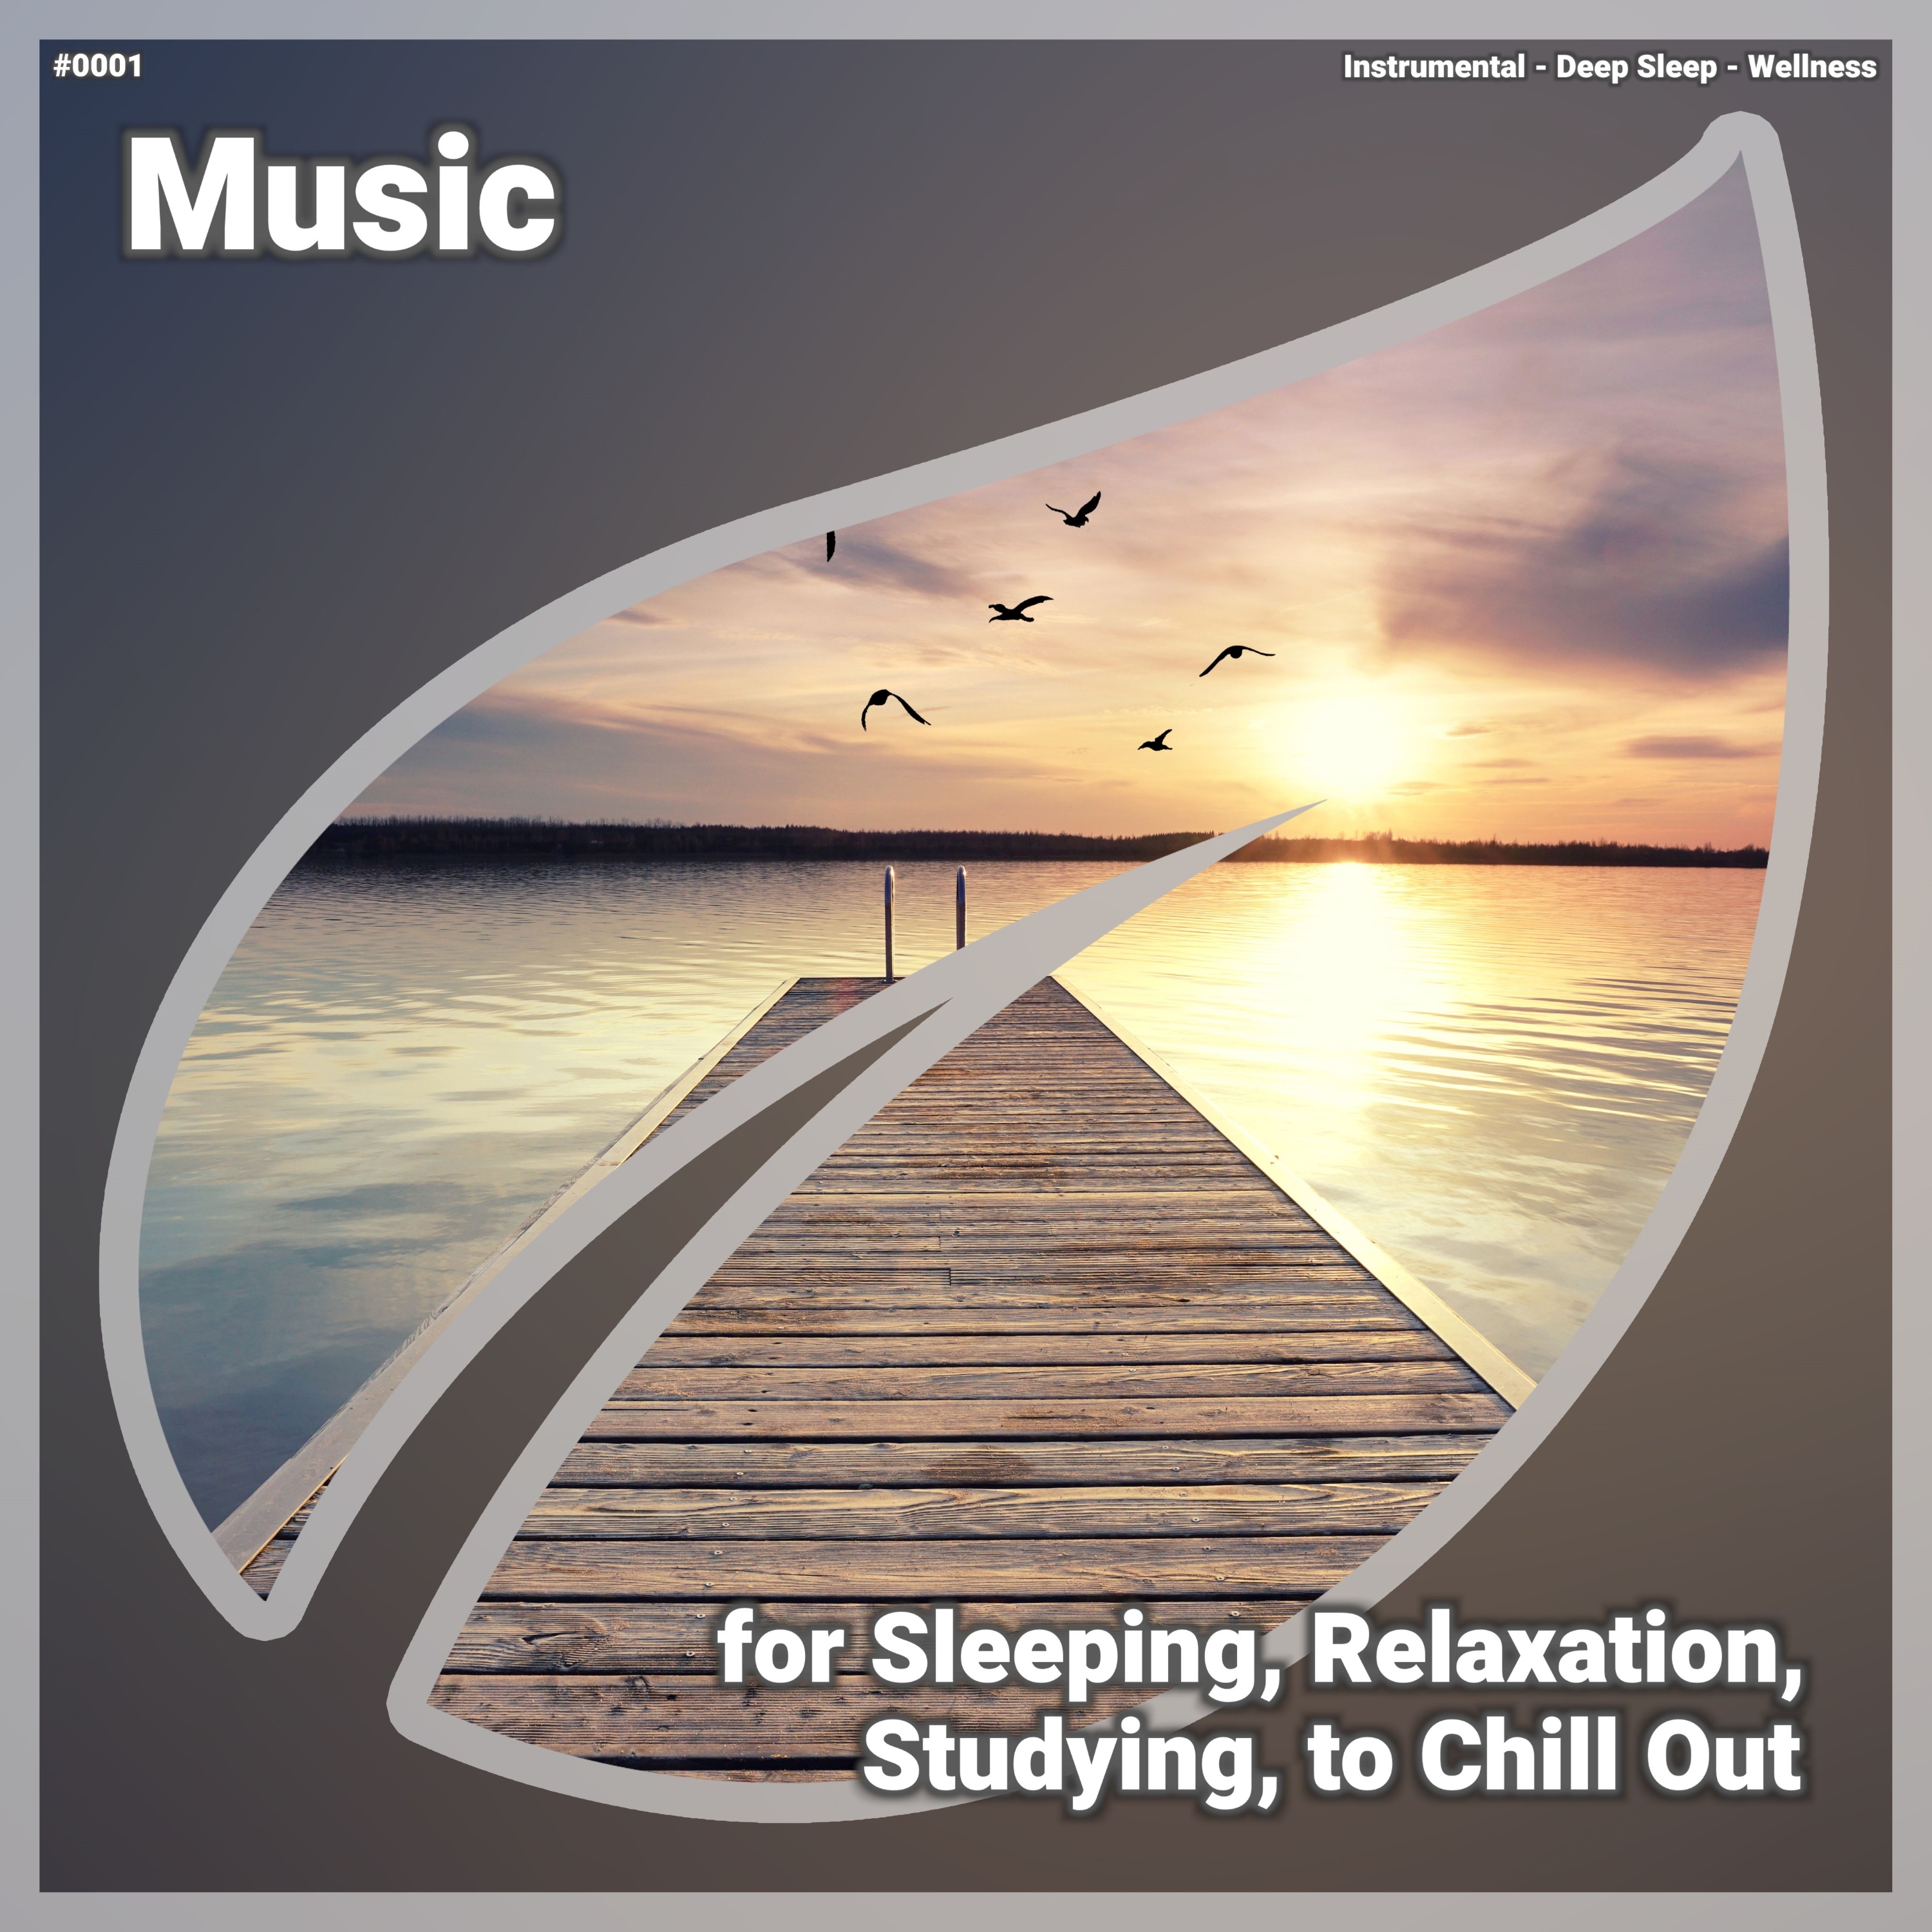 डाउनलोड करा Relaxing Music, Pt. 45